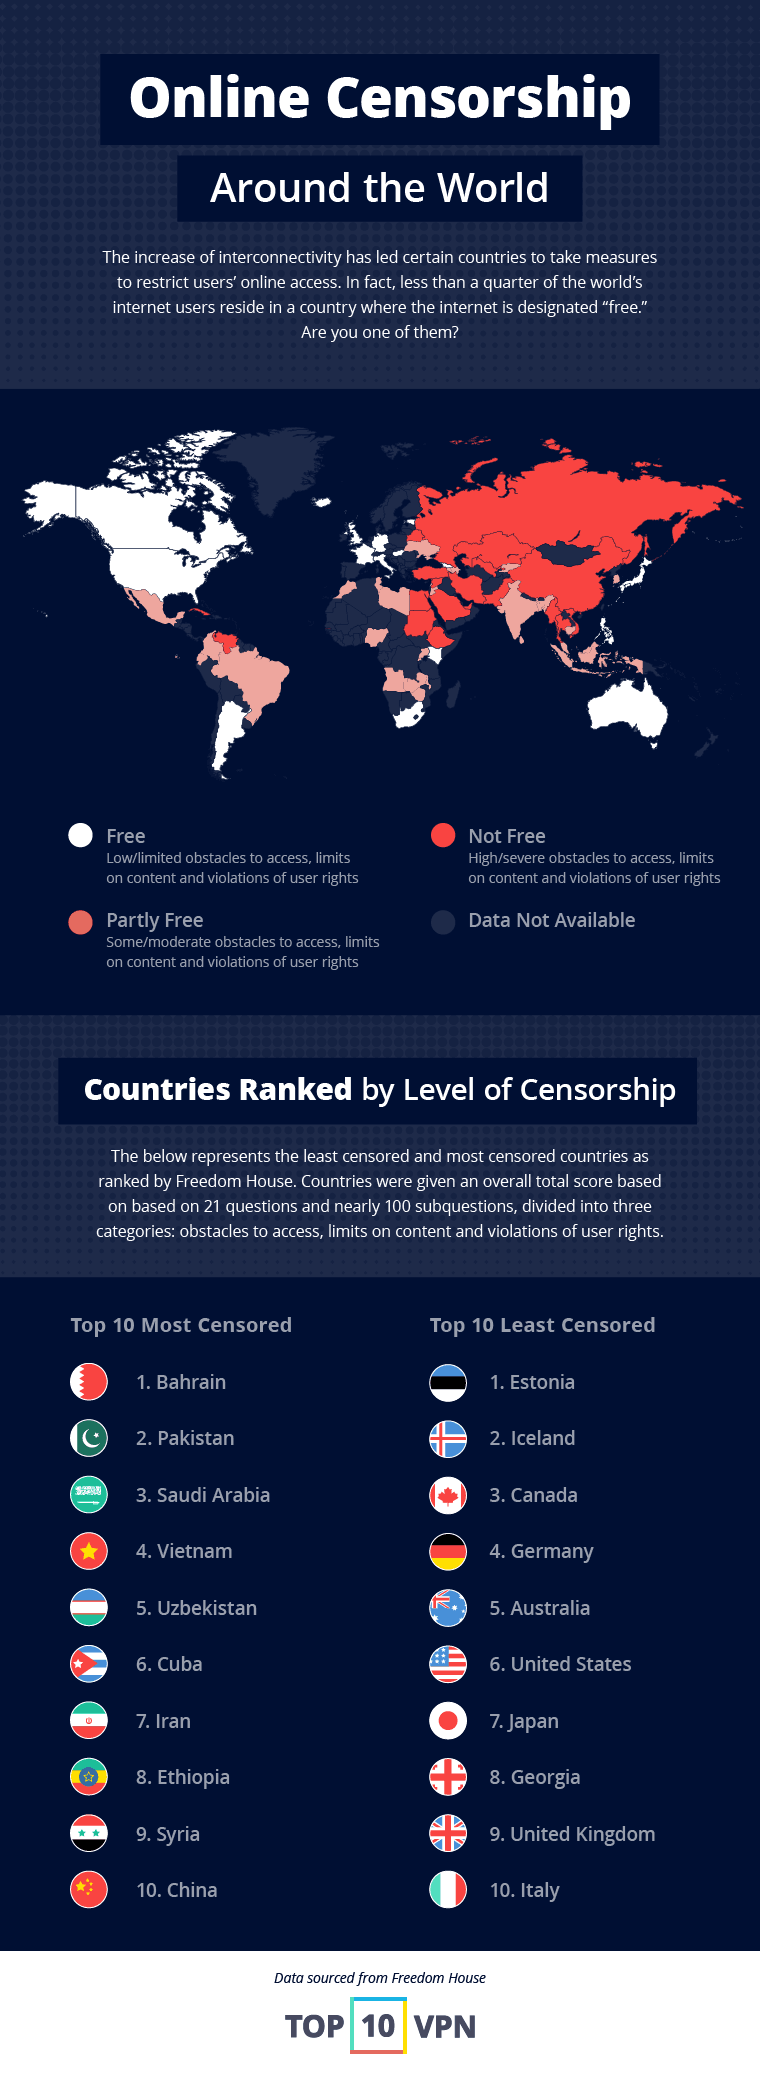 Online censorship around the world